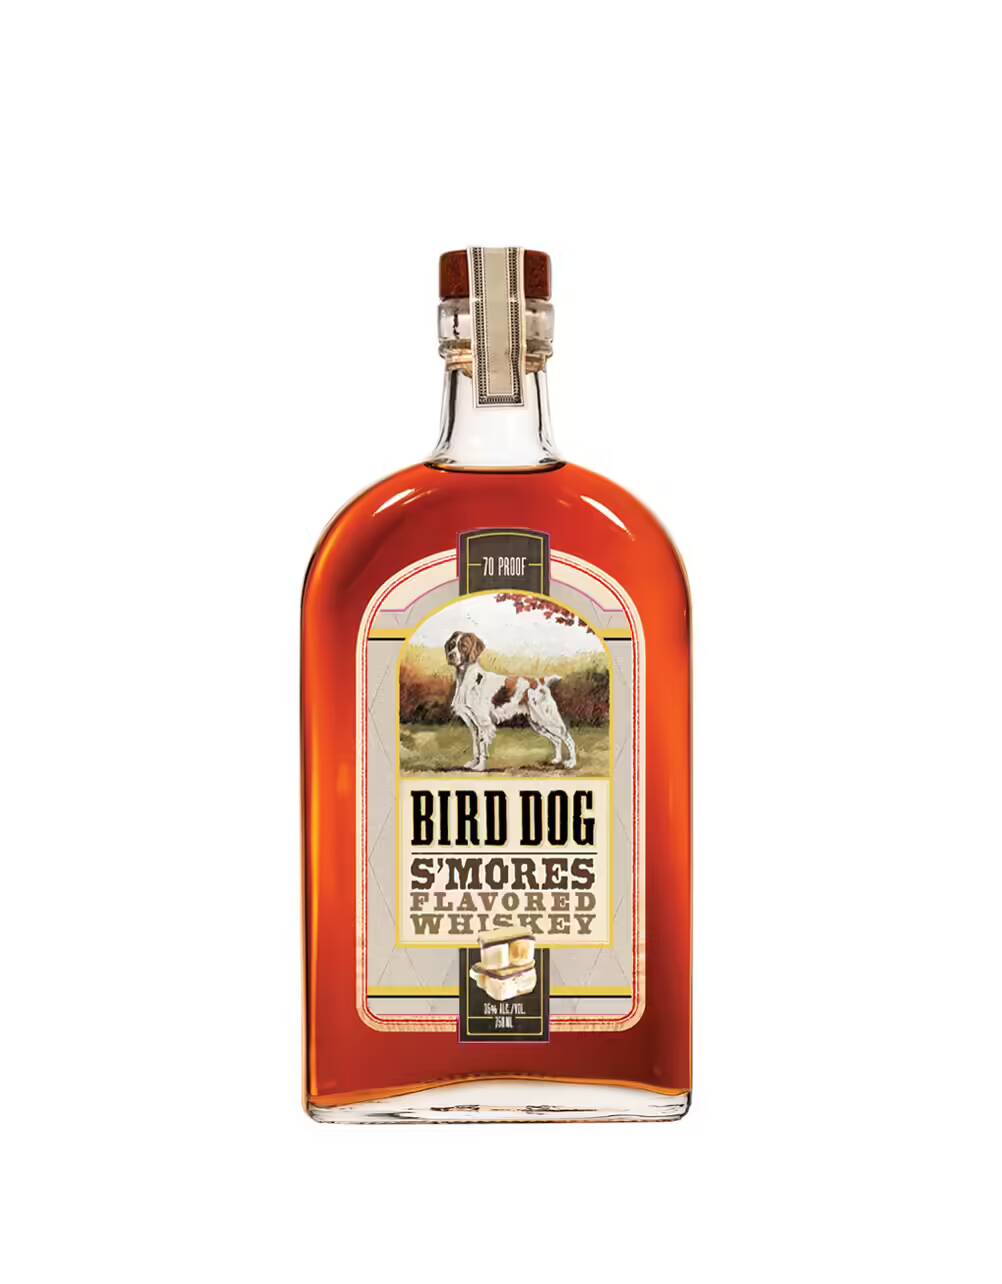 Bird Dog Smores Flavored Whiskey